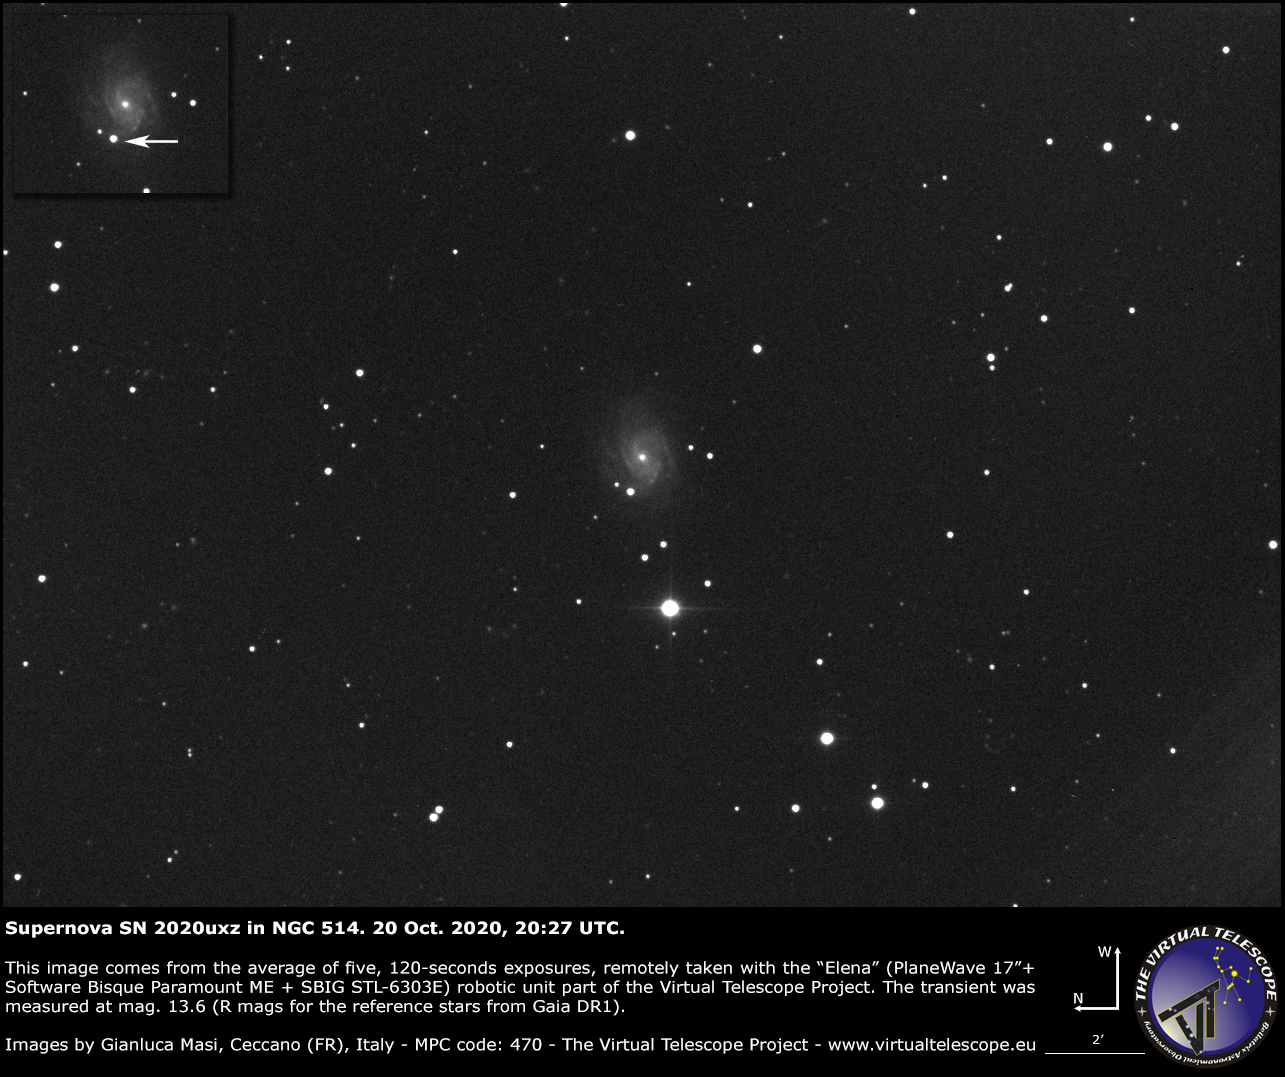 NGC 514 and supernova SN 2020uxz: 20 Oct. 2020.